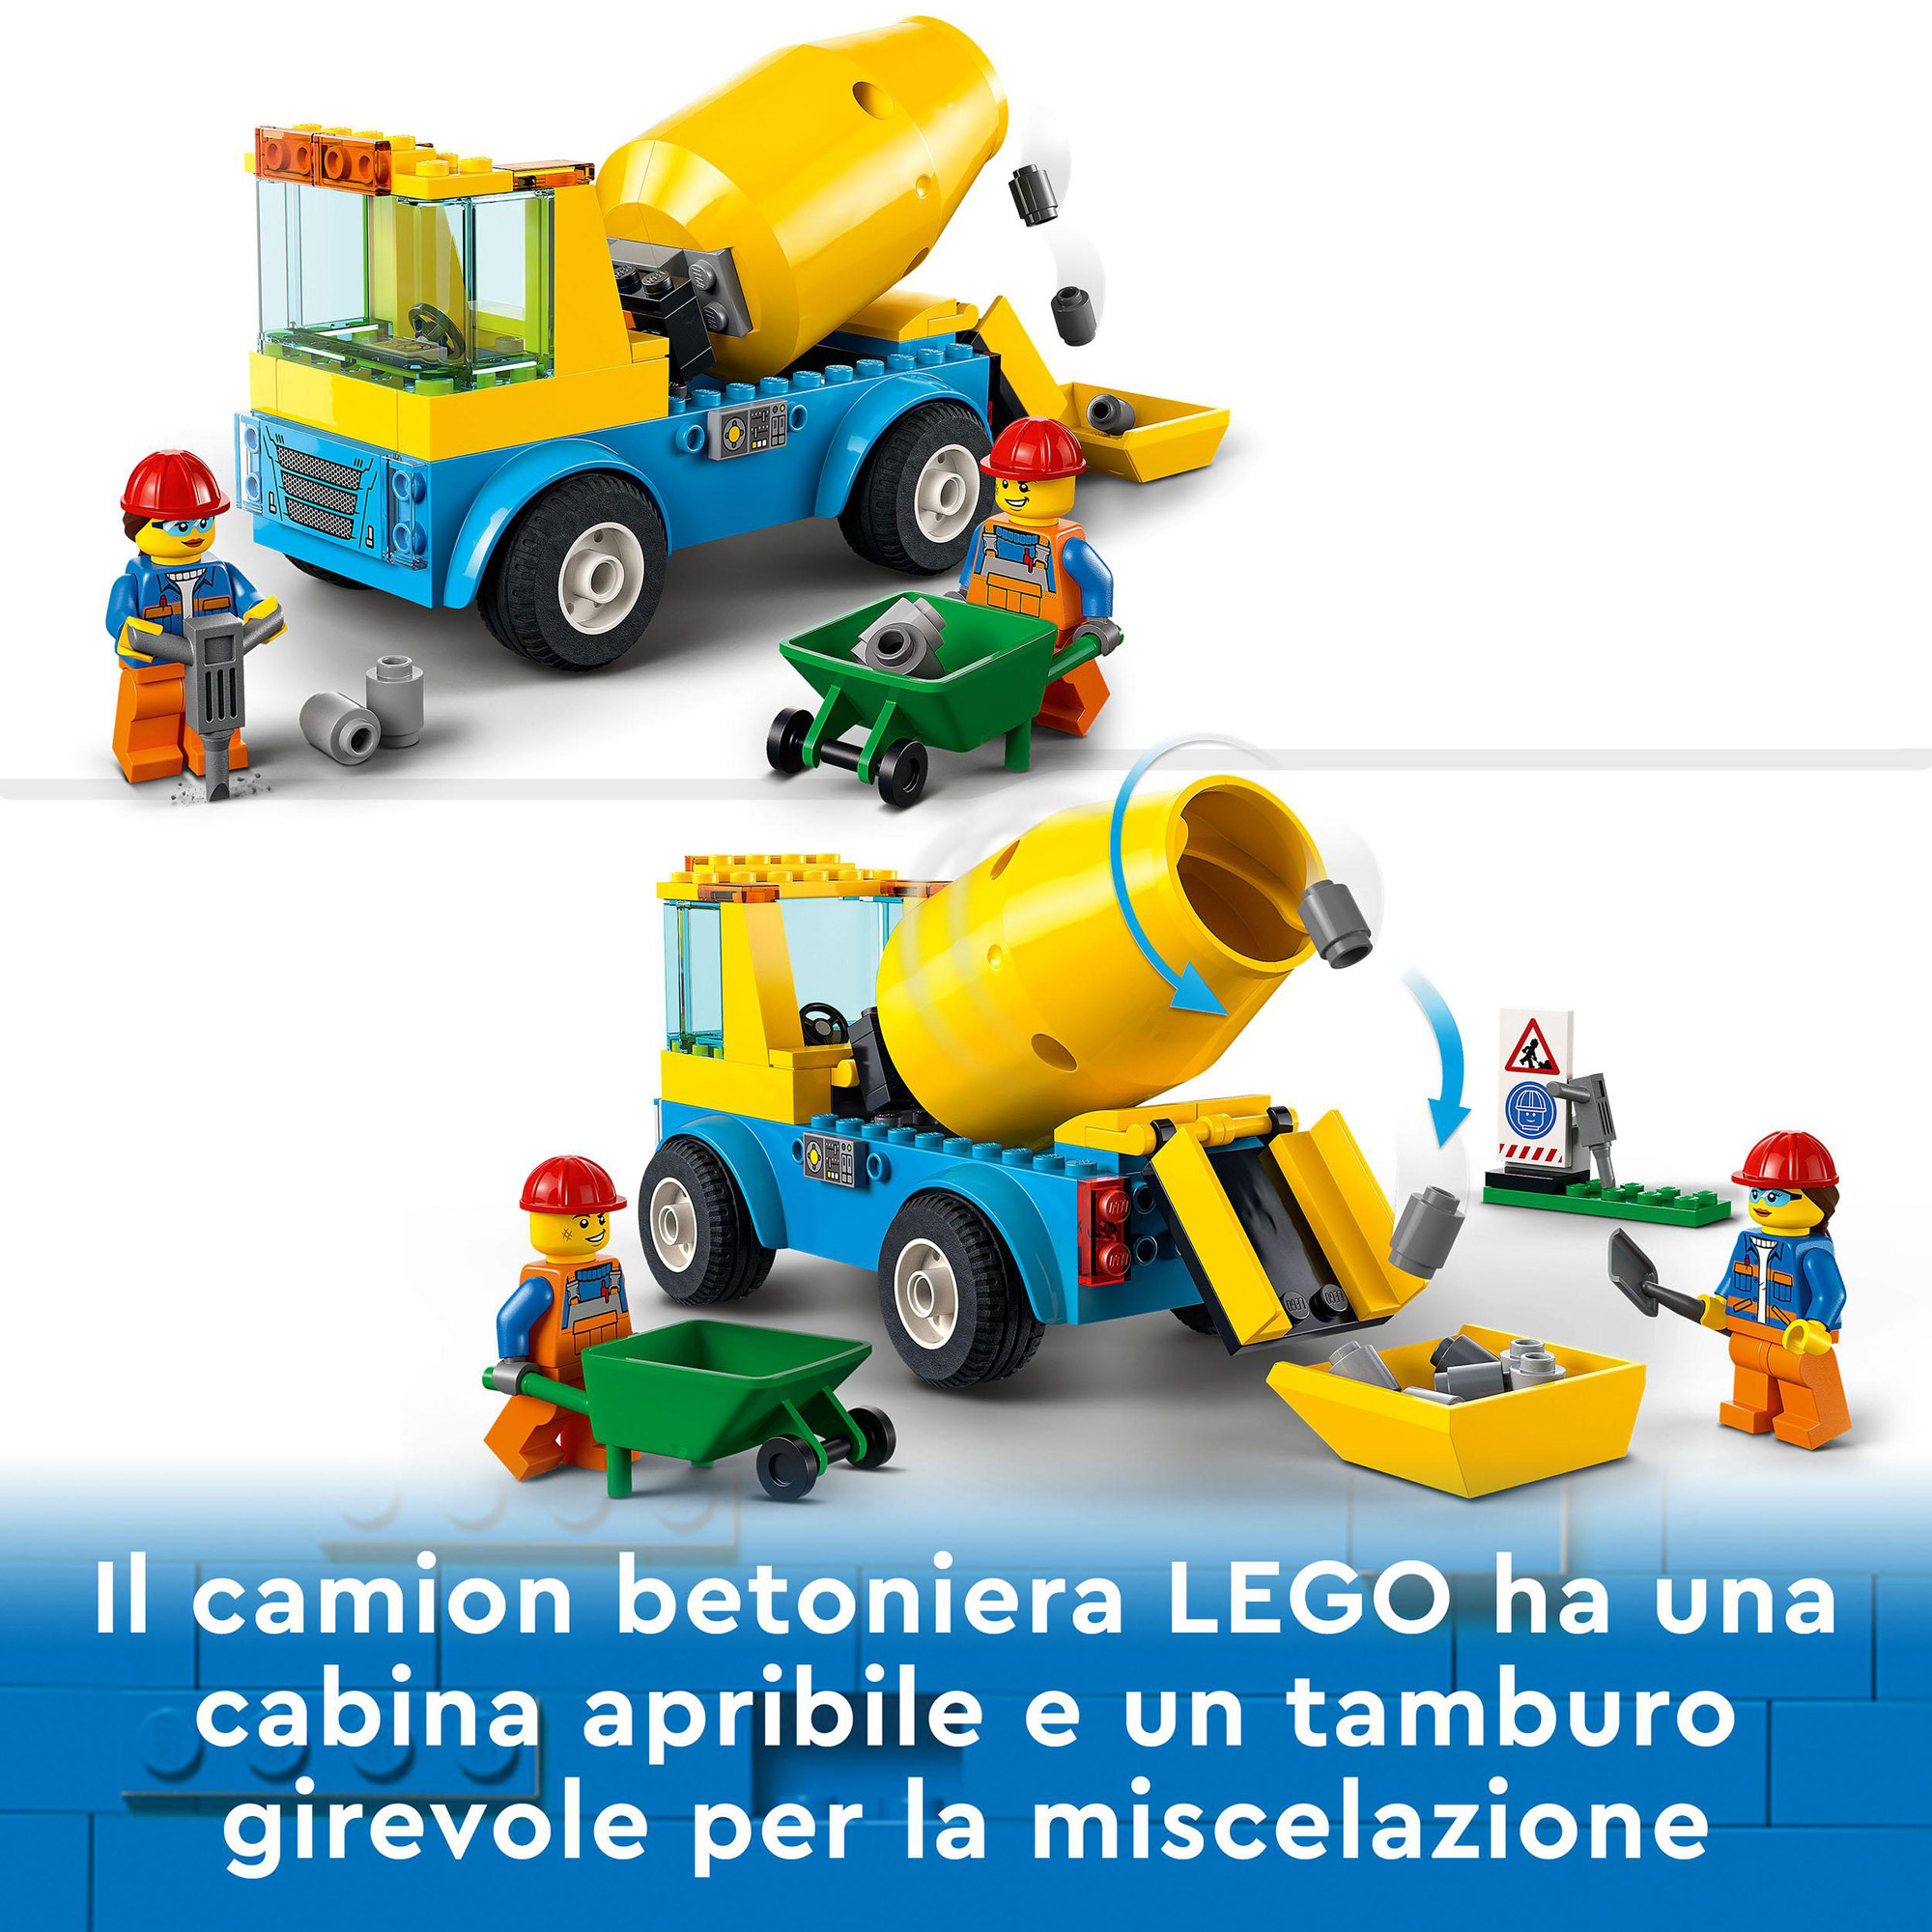 LEGO 60325 City Great Vehicles Autobetoniera - LEGO